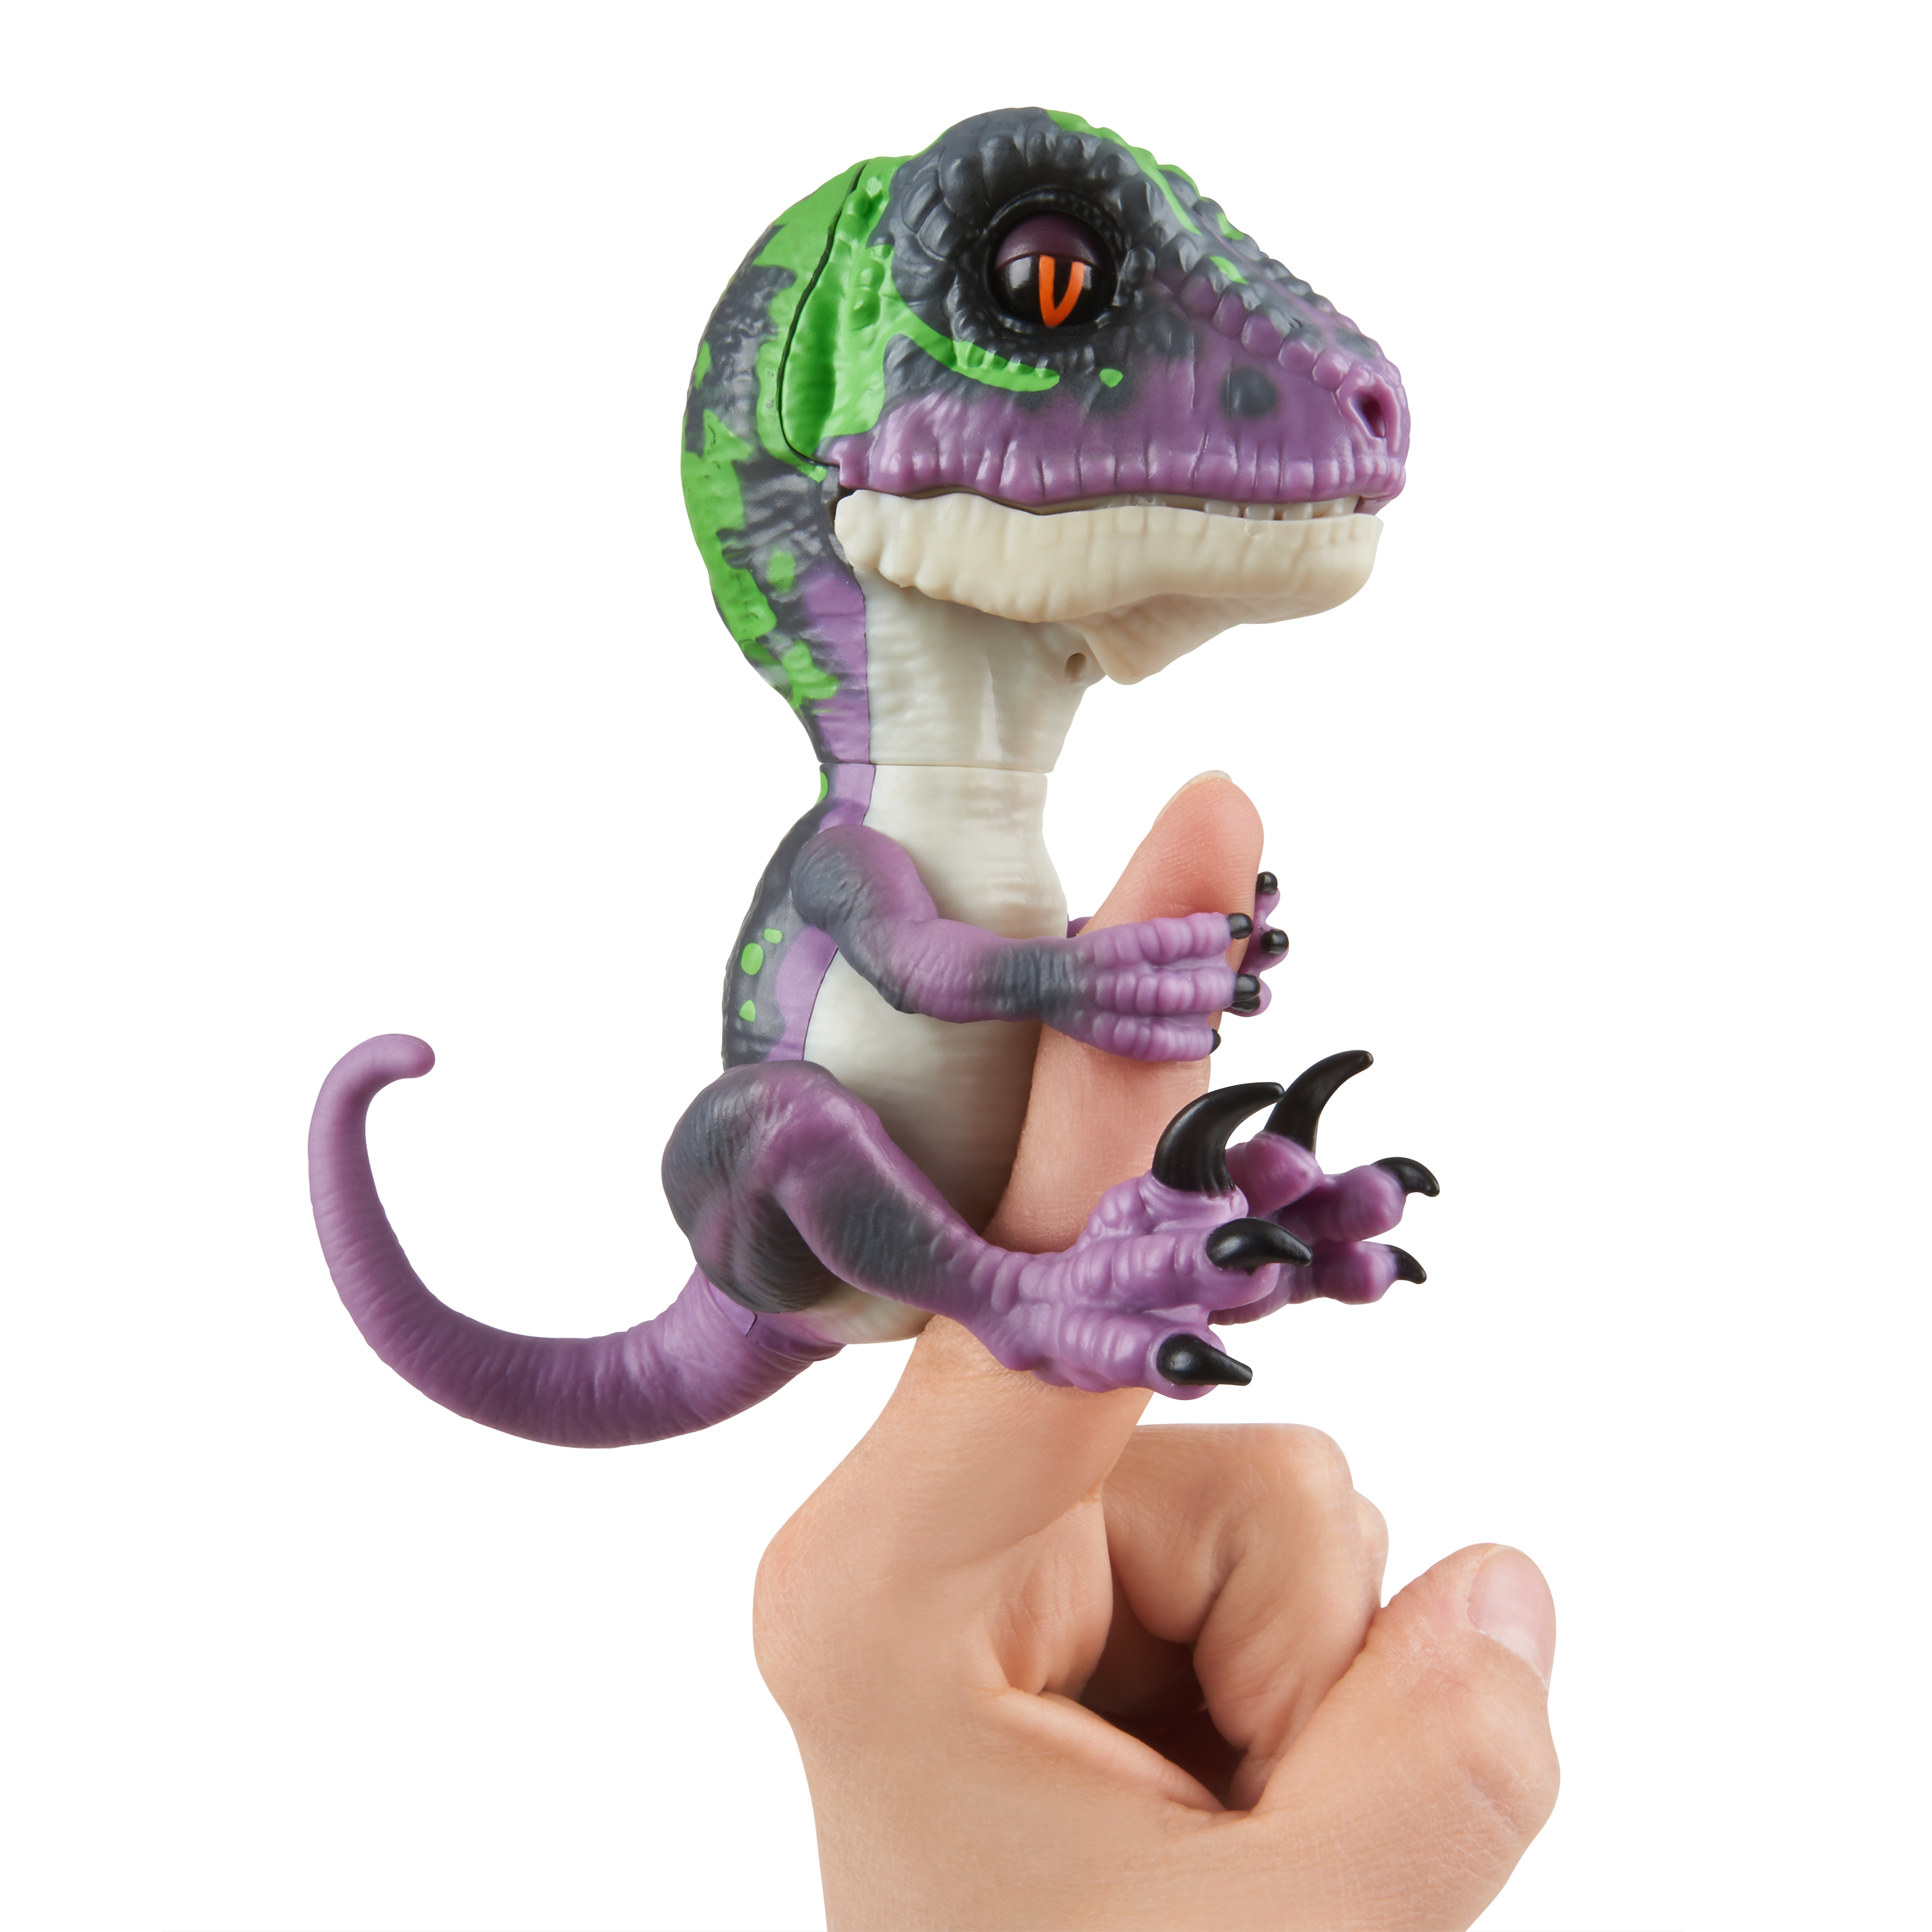 Untamed Raptor Series 1 - Razor - Interactive Dinosaur by WowWee - image 5 of 11